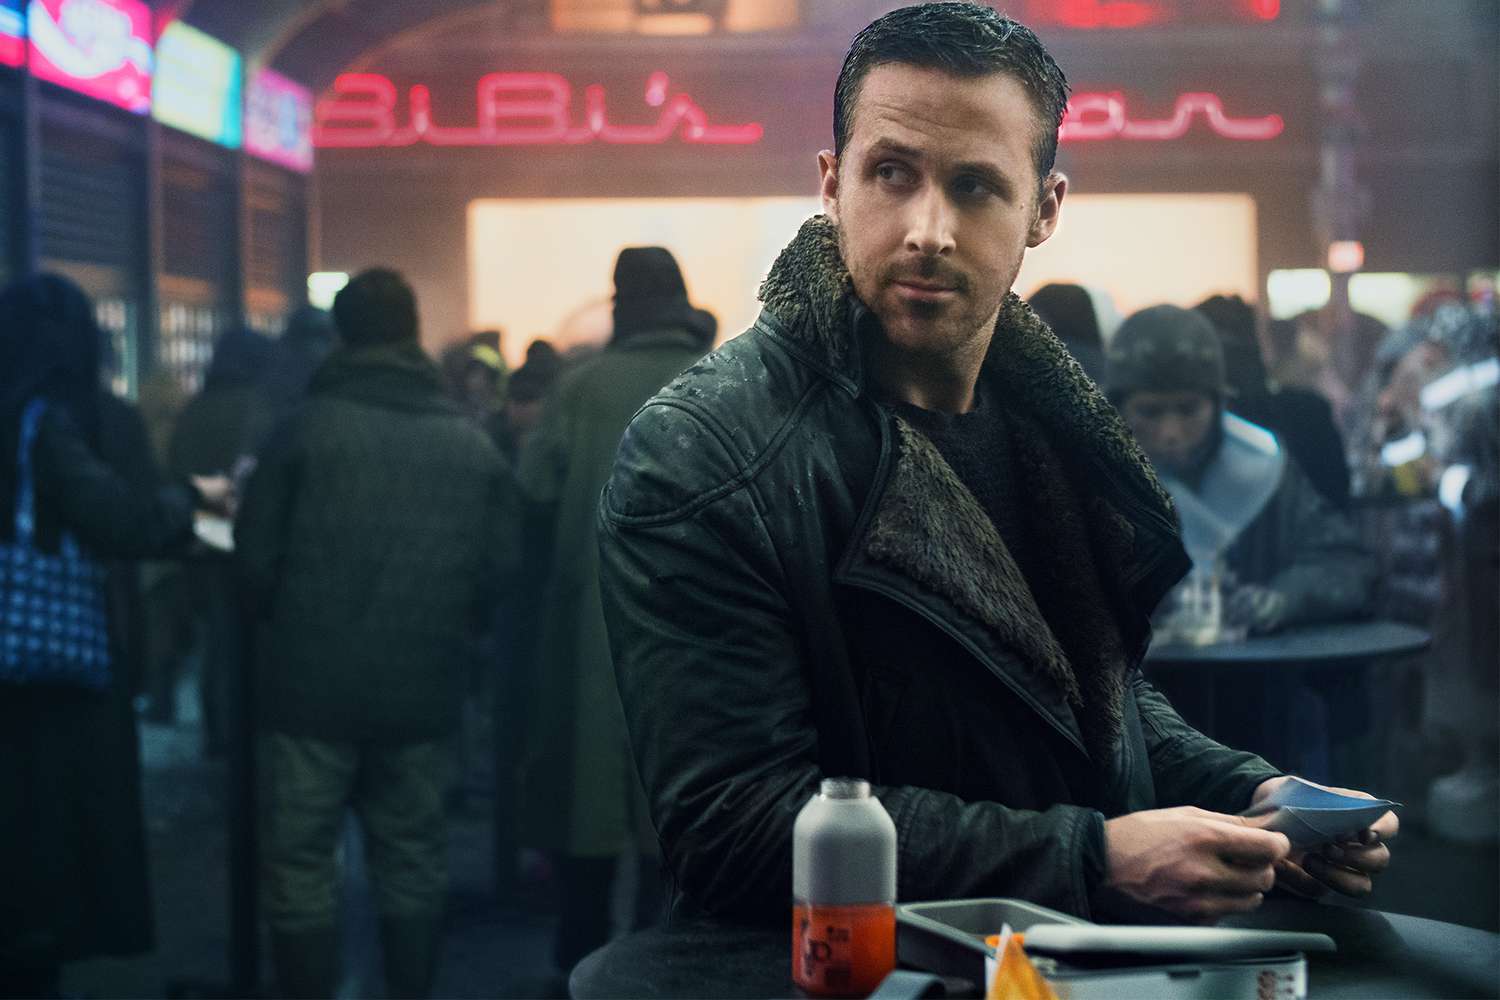 Blade Runner 2049 (2017) Ryan Gosling as K